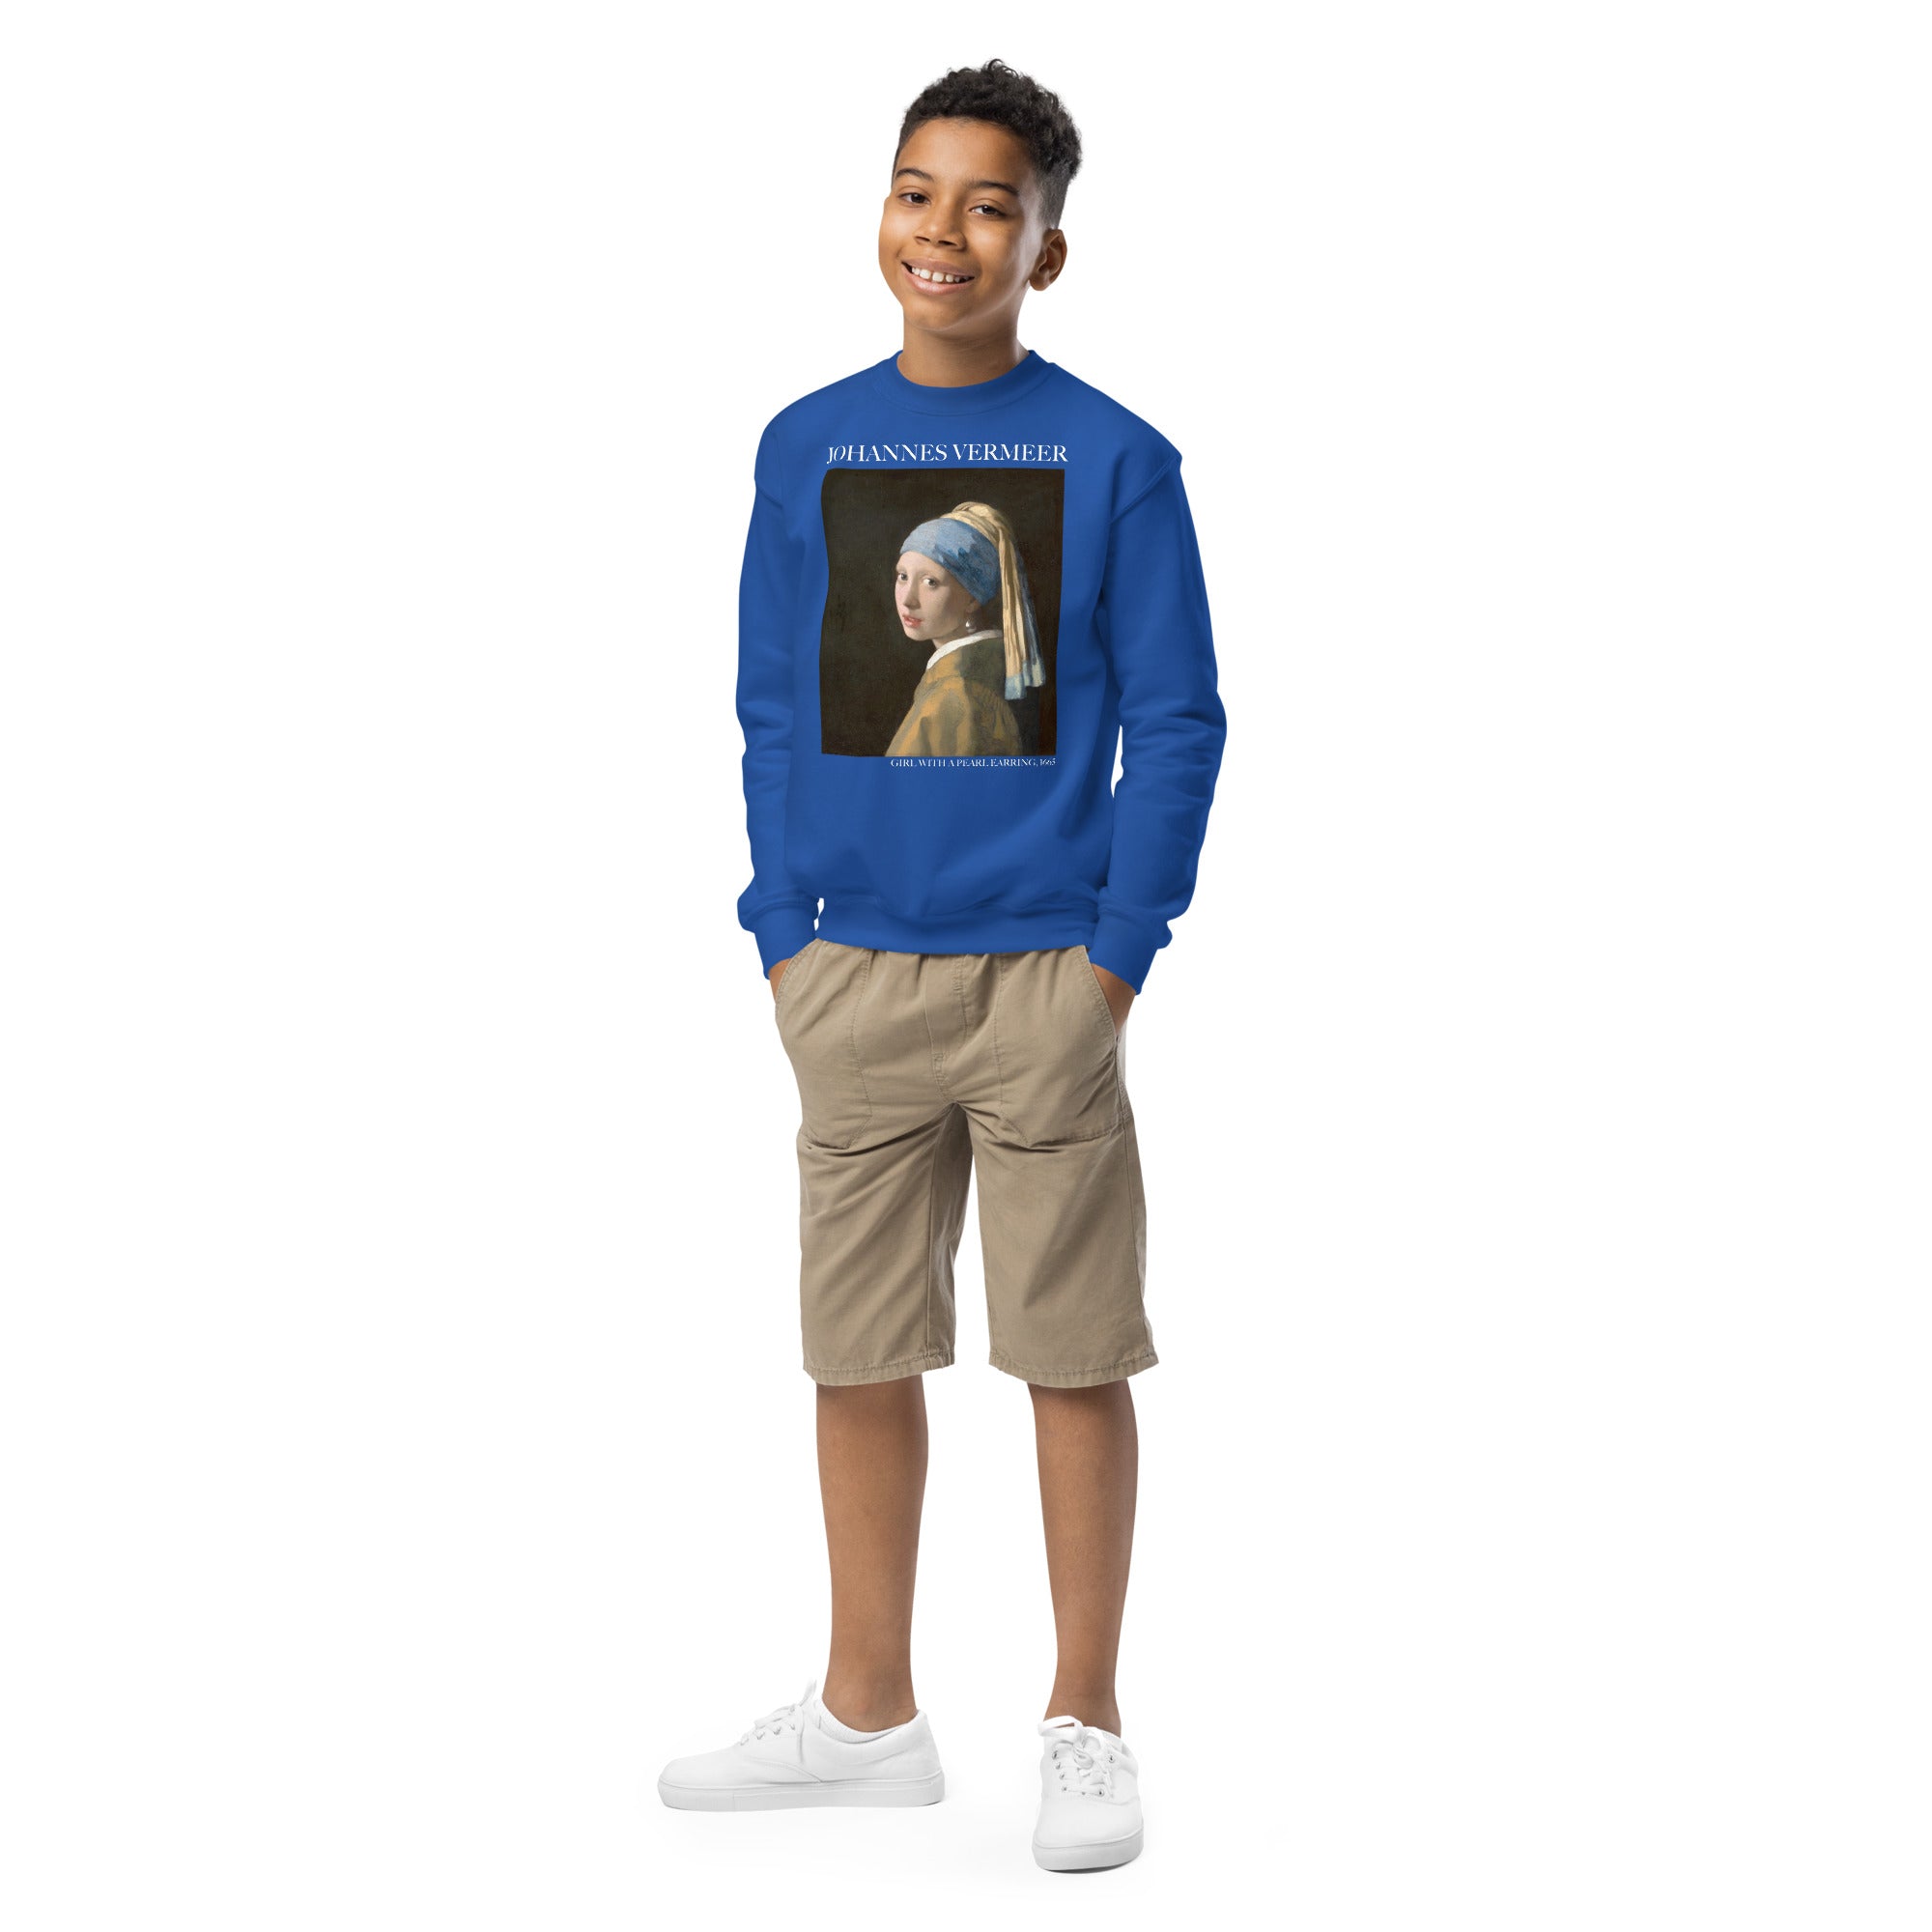 Johannes Vermeer 'Girl with a Pearl Earring' Famous Painting Crewneck Sweatshirt | Premium Youth Art Sweatshirt